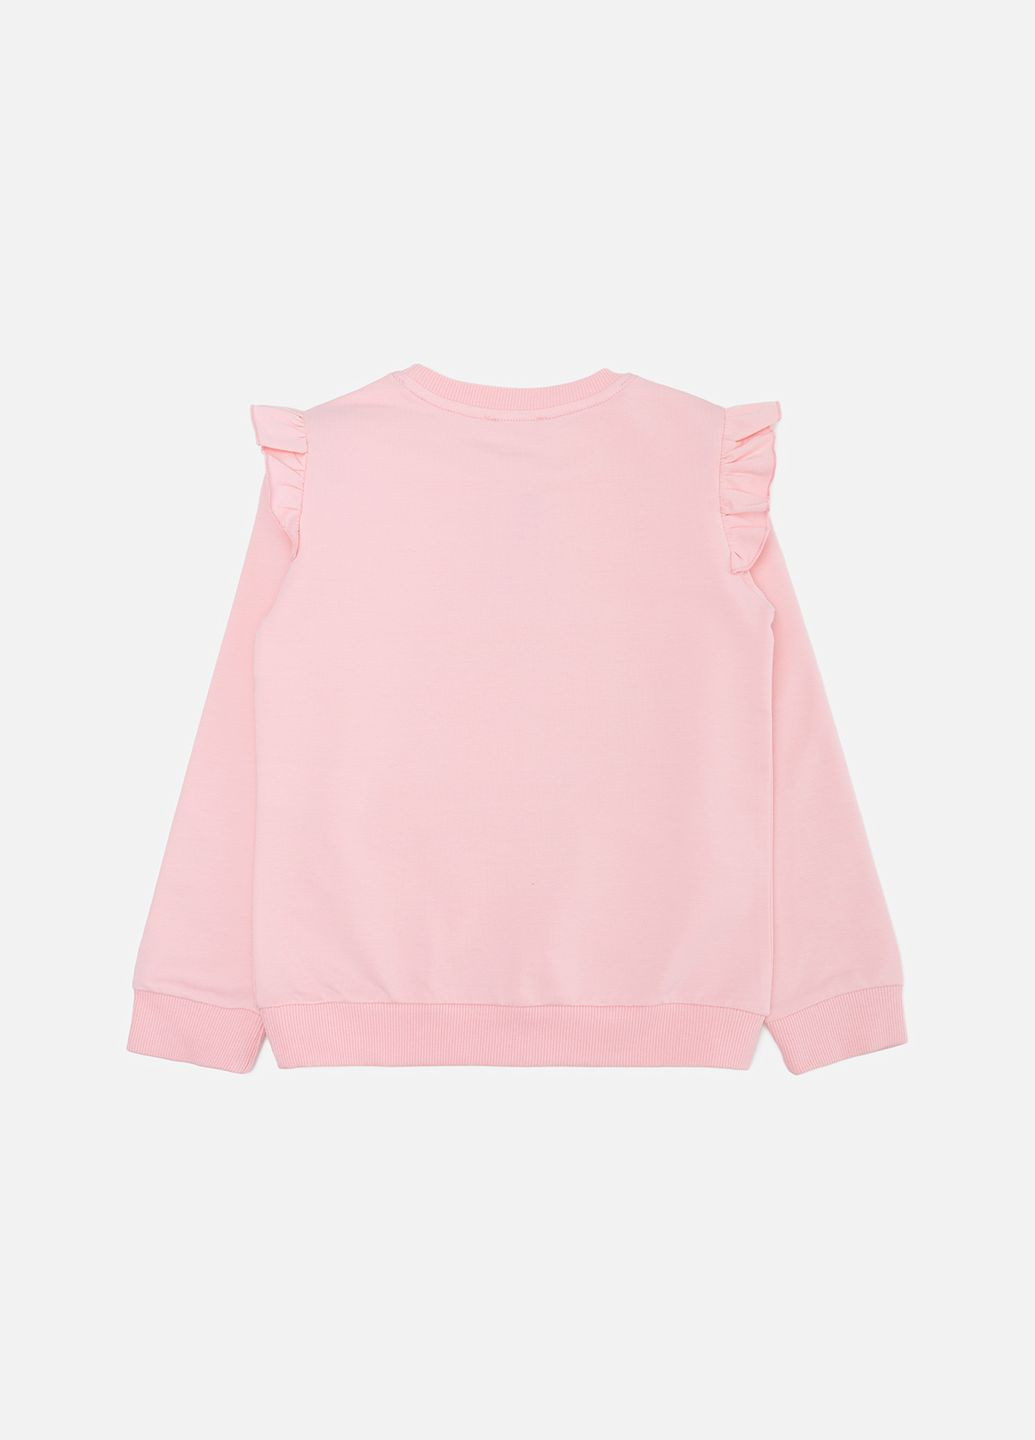 BREEZE GIRLS-BOYS свитшот для девочки цвет розовый цб-00242426 розовый трикотаж